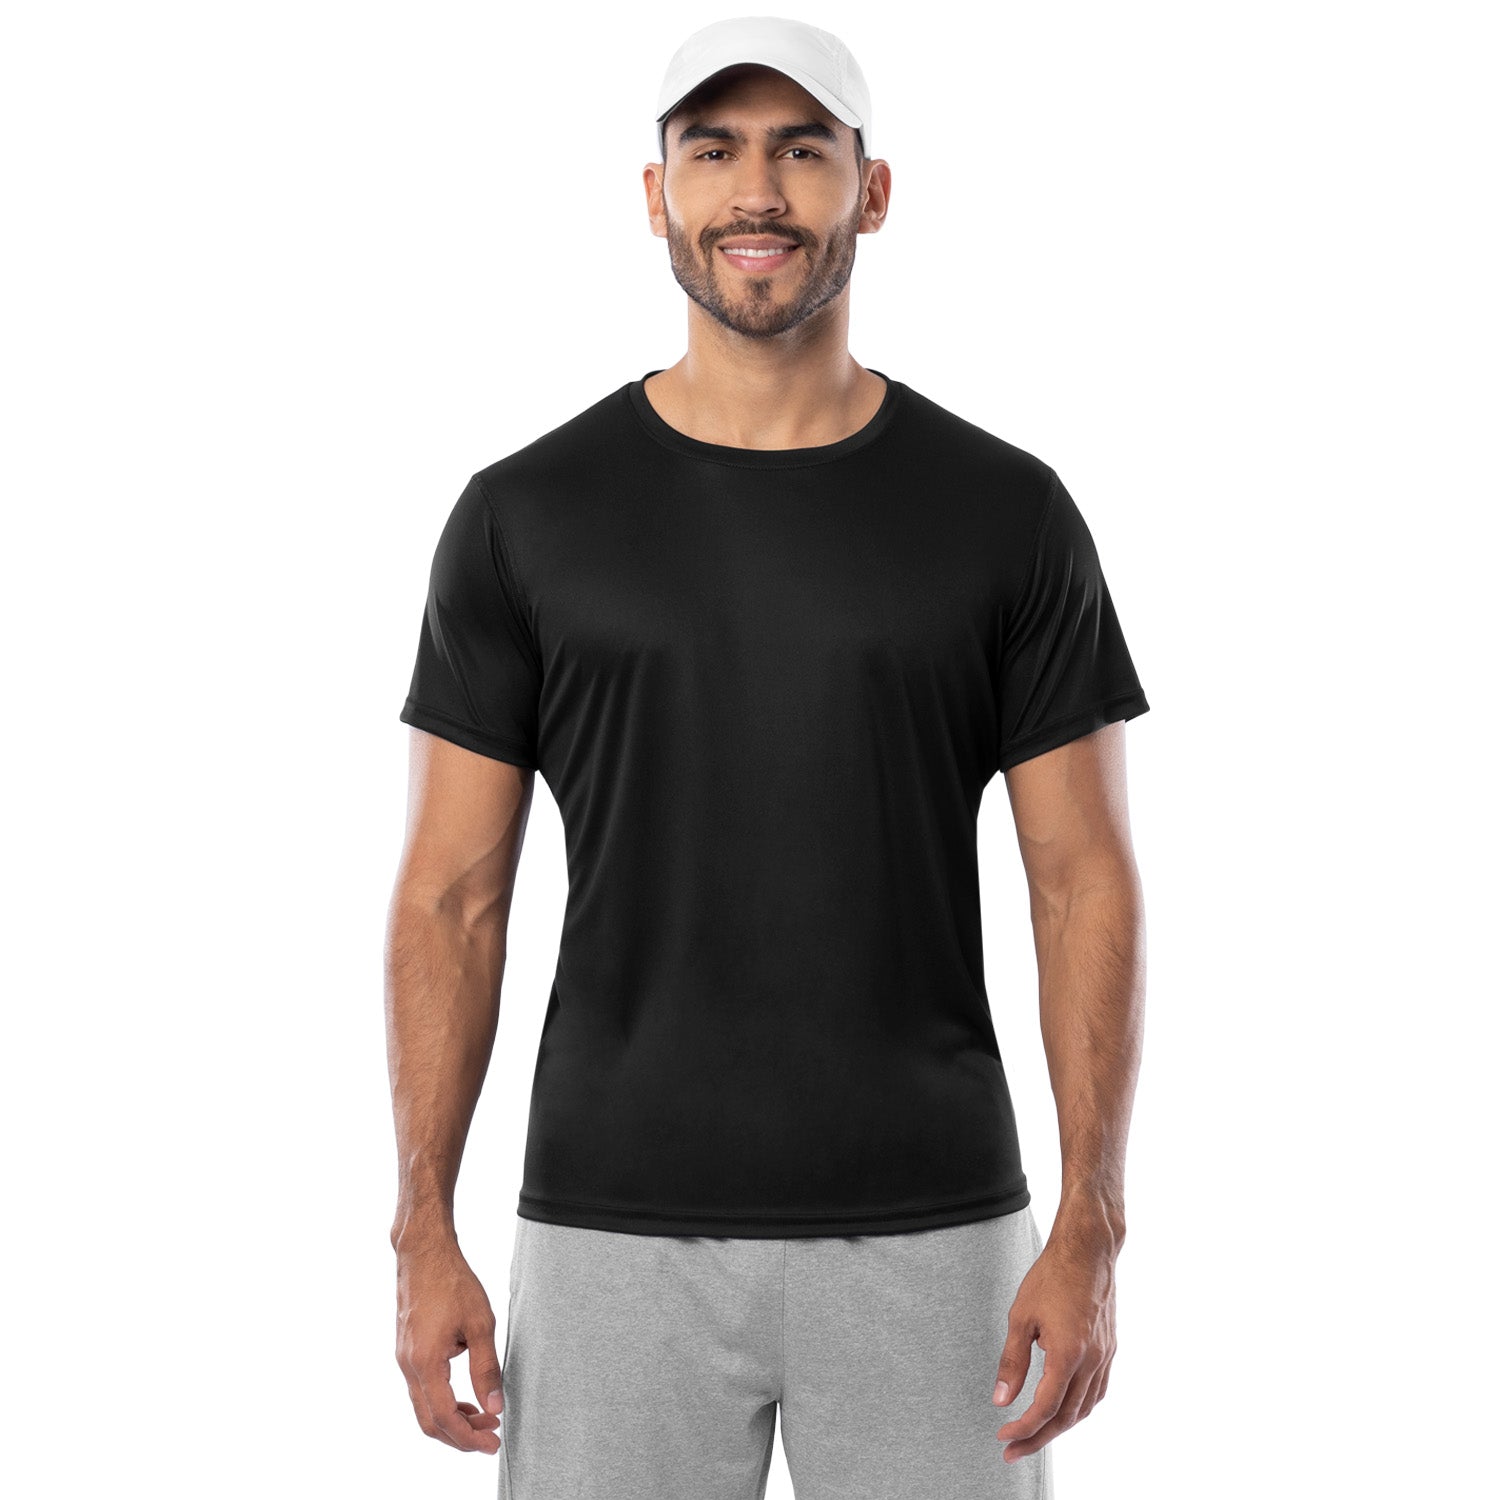 Men's Black Training T-Shirt Front View